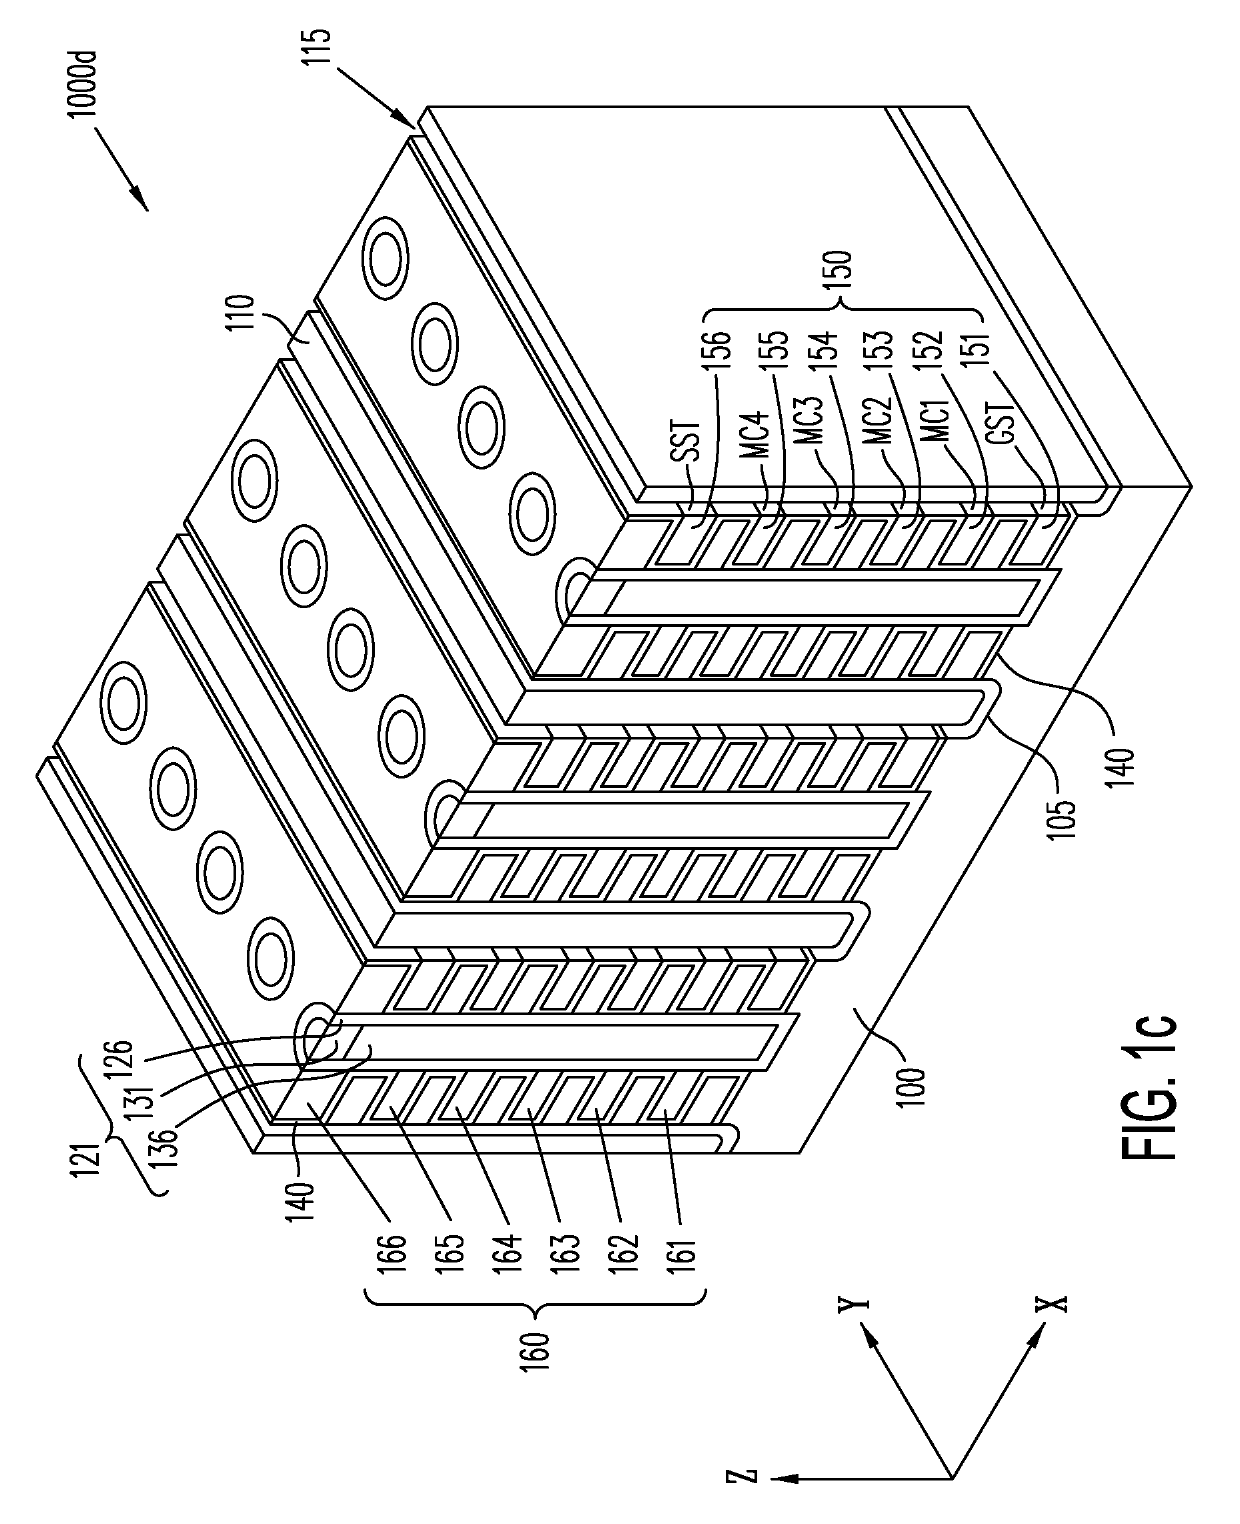 Three-dimensional vertical NOR flash thin-film transistor strings